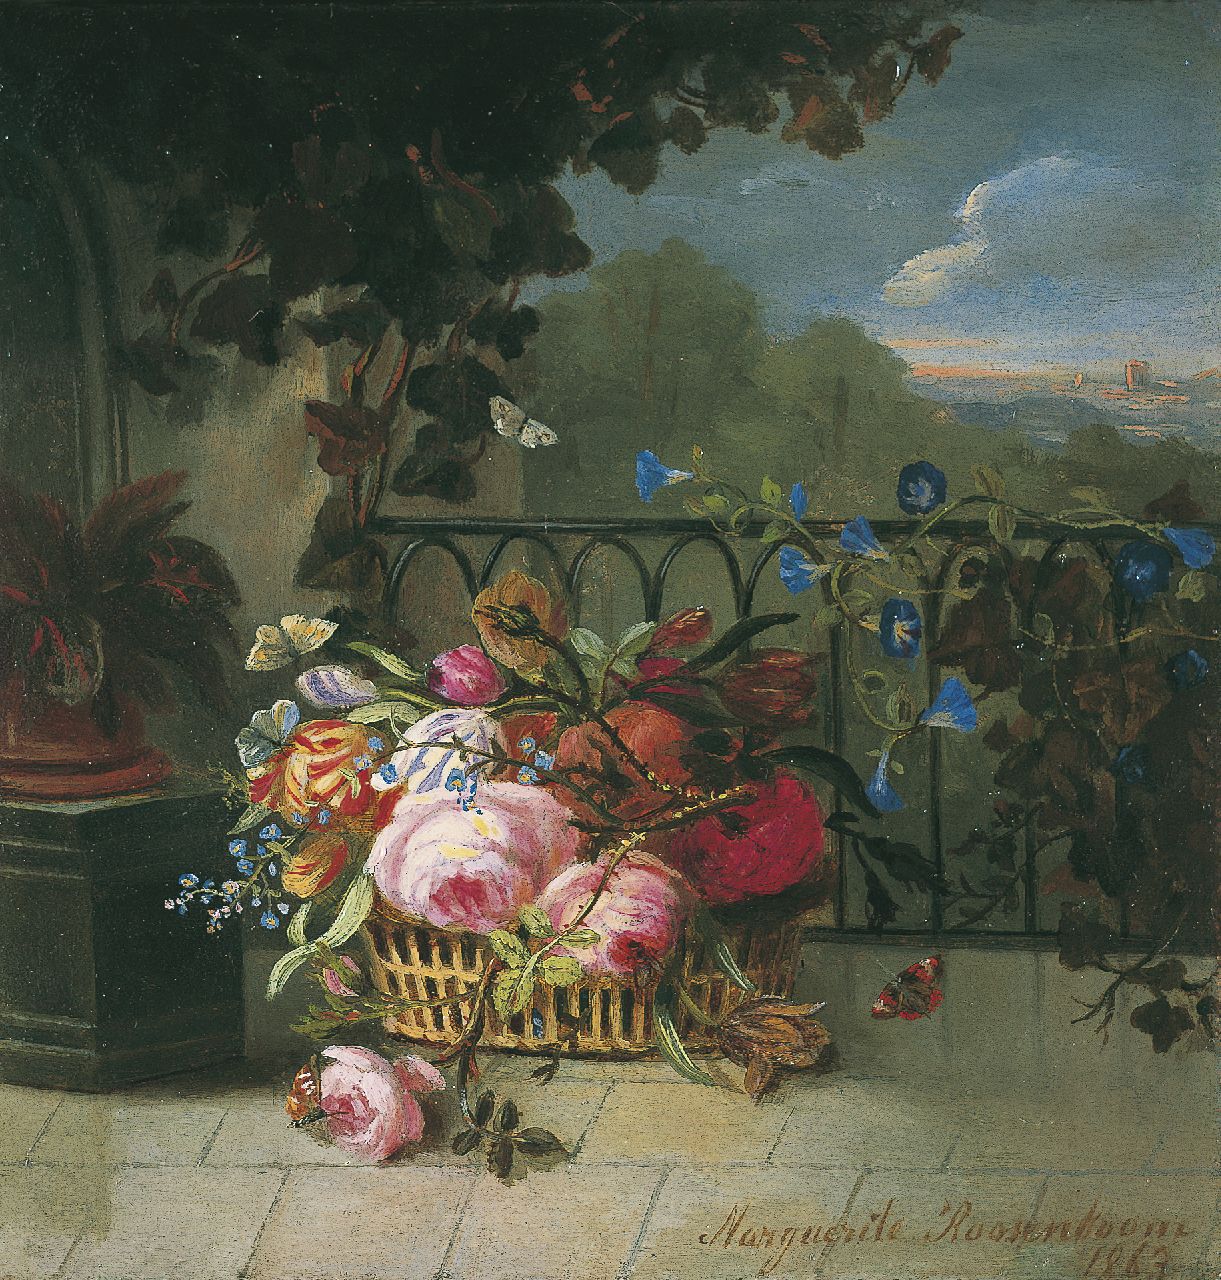 Roosenboom M.C.J.W.H.  | 'Margaretha' Cornelia Johanna Wilhelmina Henriëtta Roosenboom, Flowers in a basket, oil on panel 15.0 x 14.3 cm, signed l.r. and dated 1863